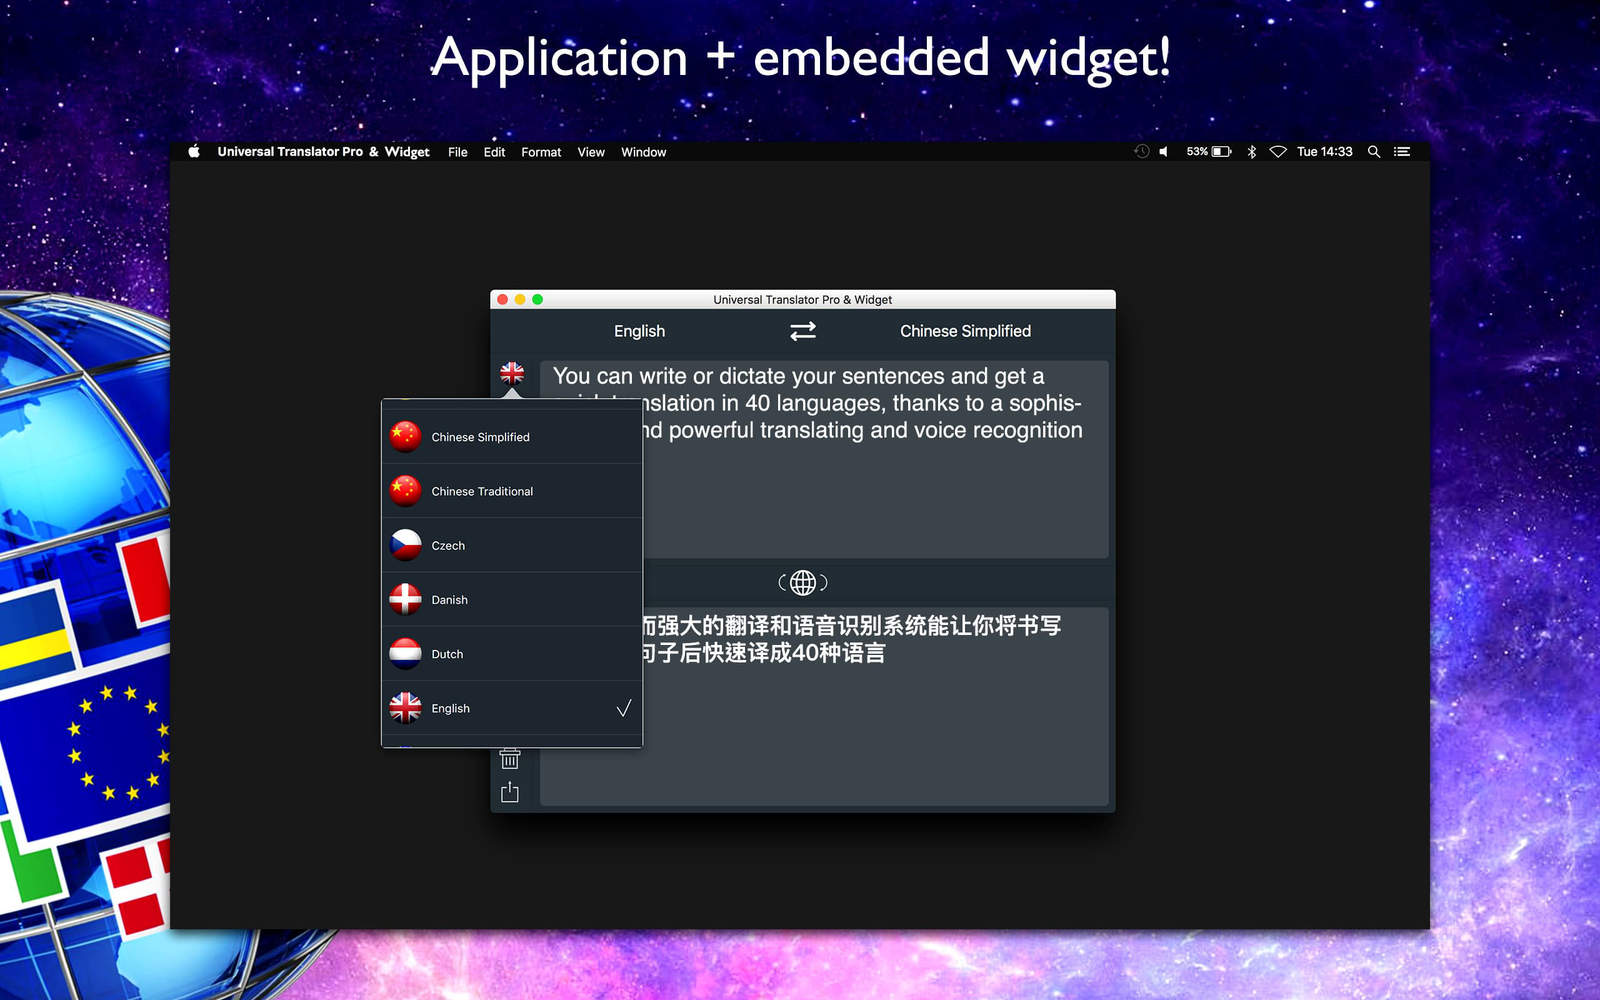 Universal Translator Pro & Widget 1.0 : Main Window